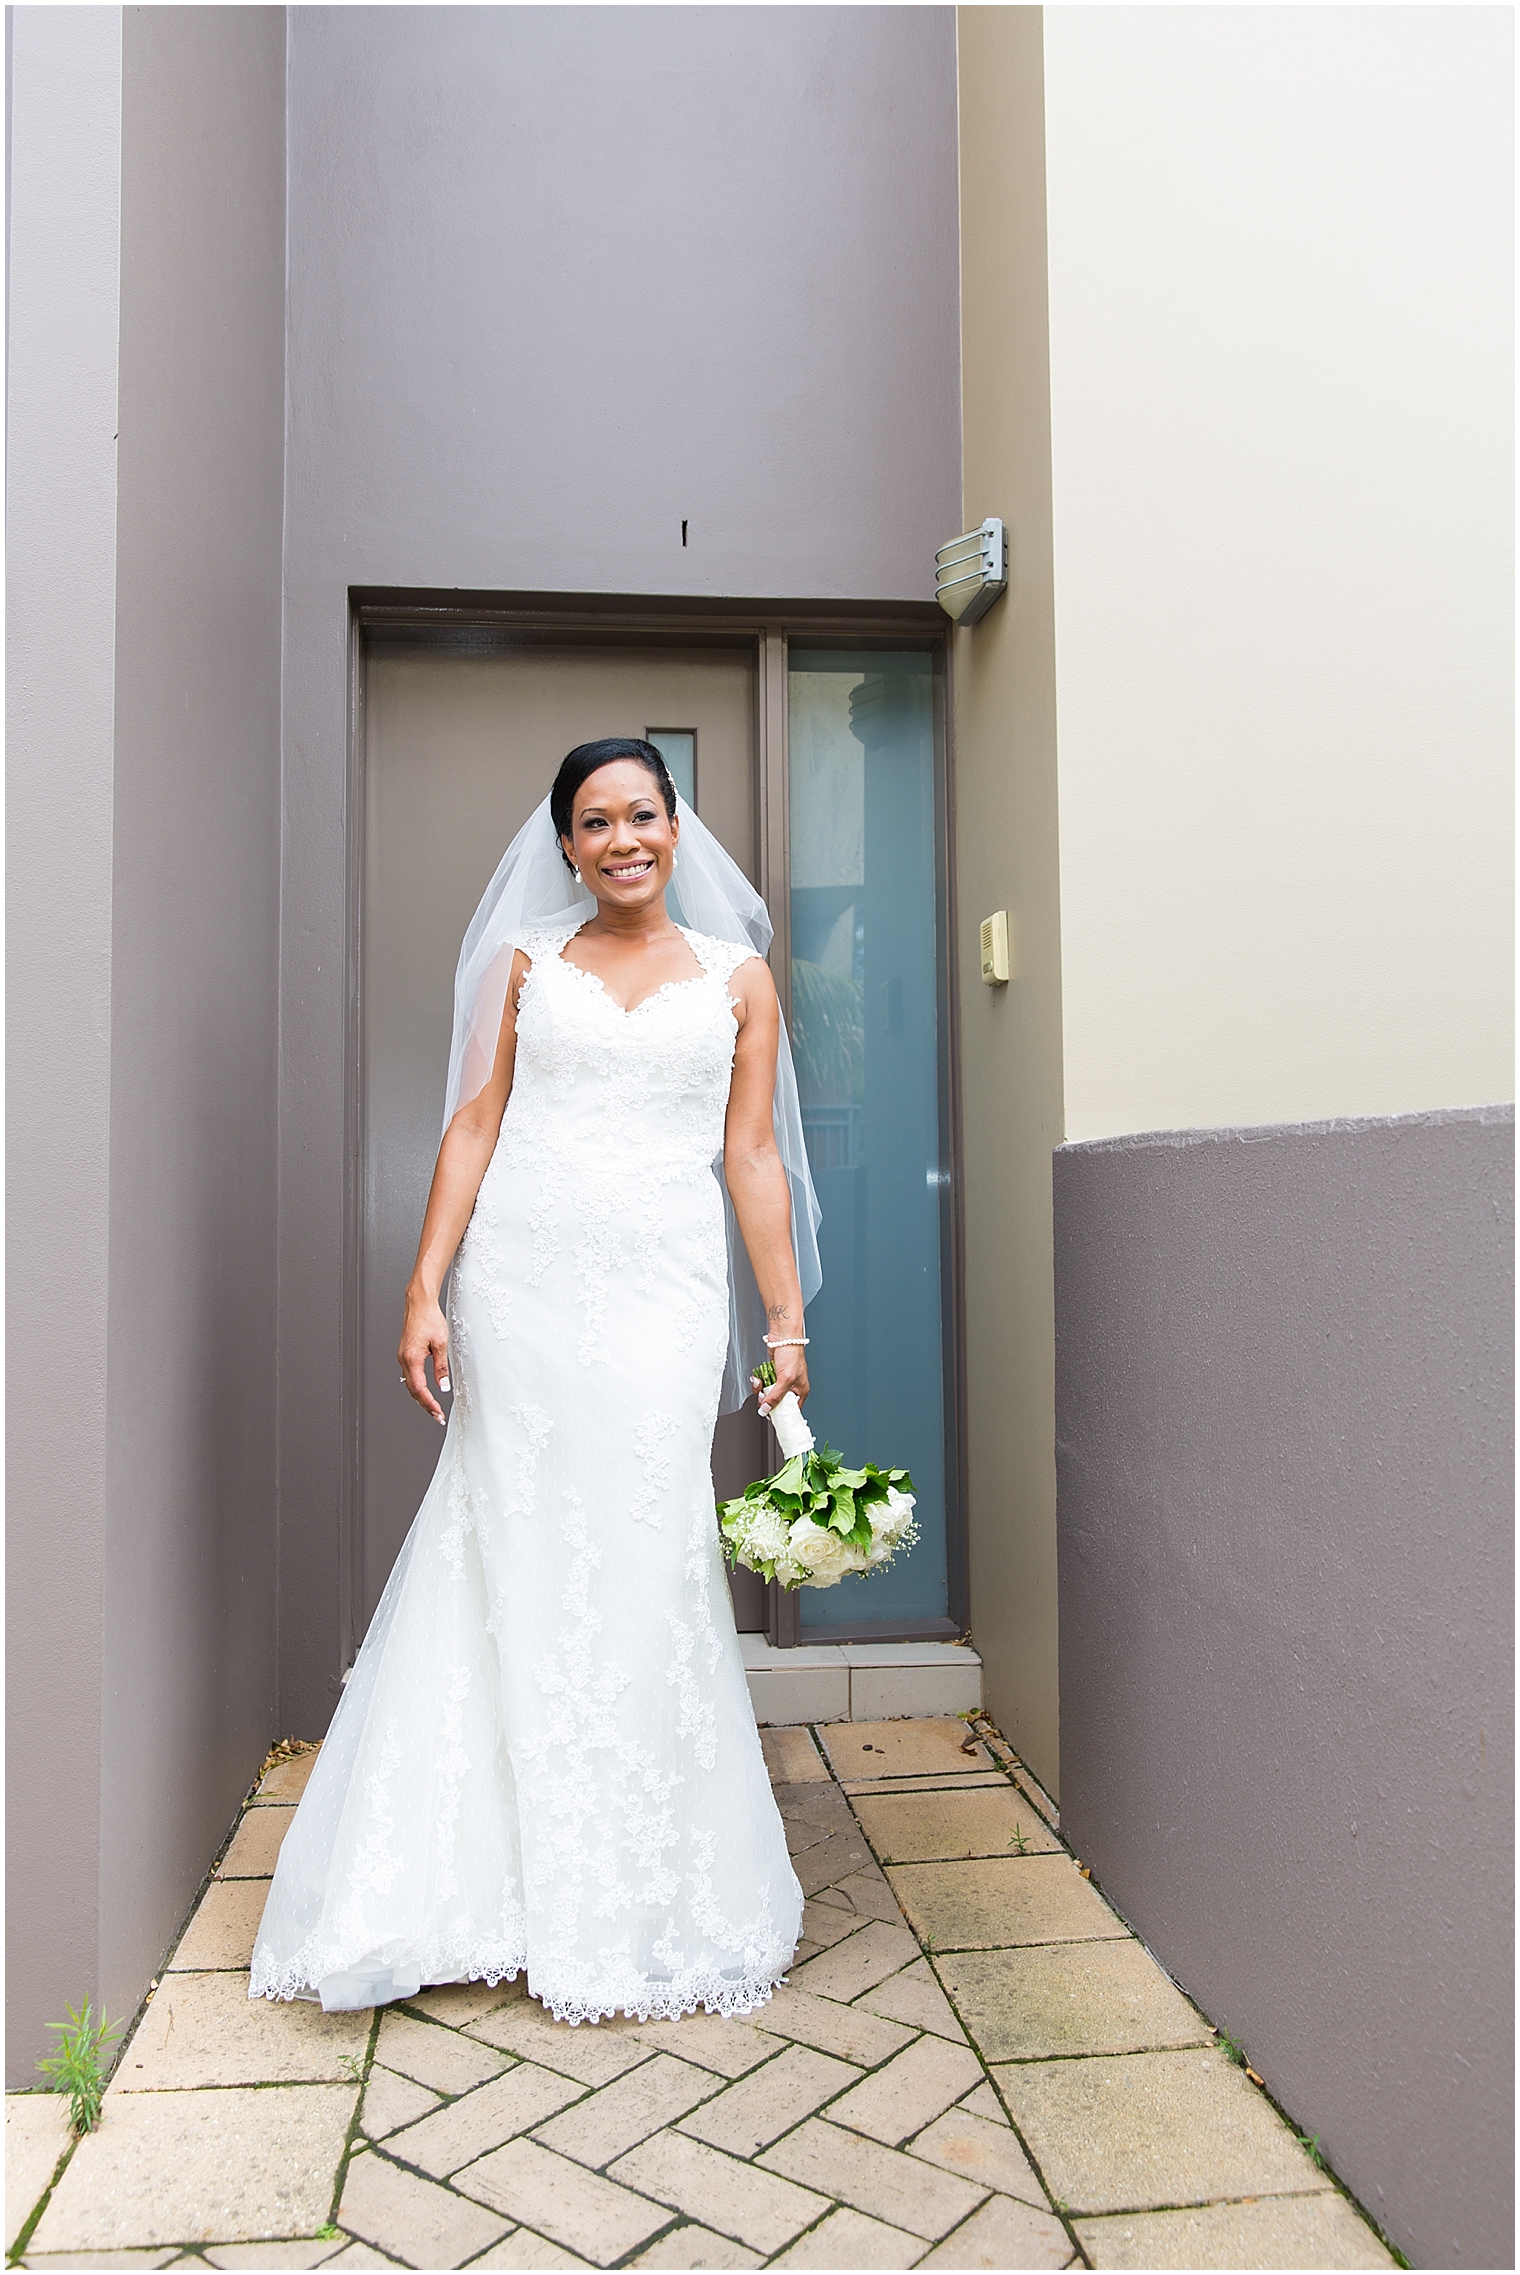 Sydney Wedding Photographer, Bride Potrait